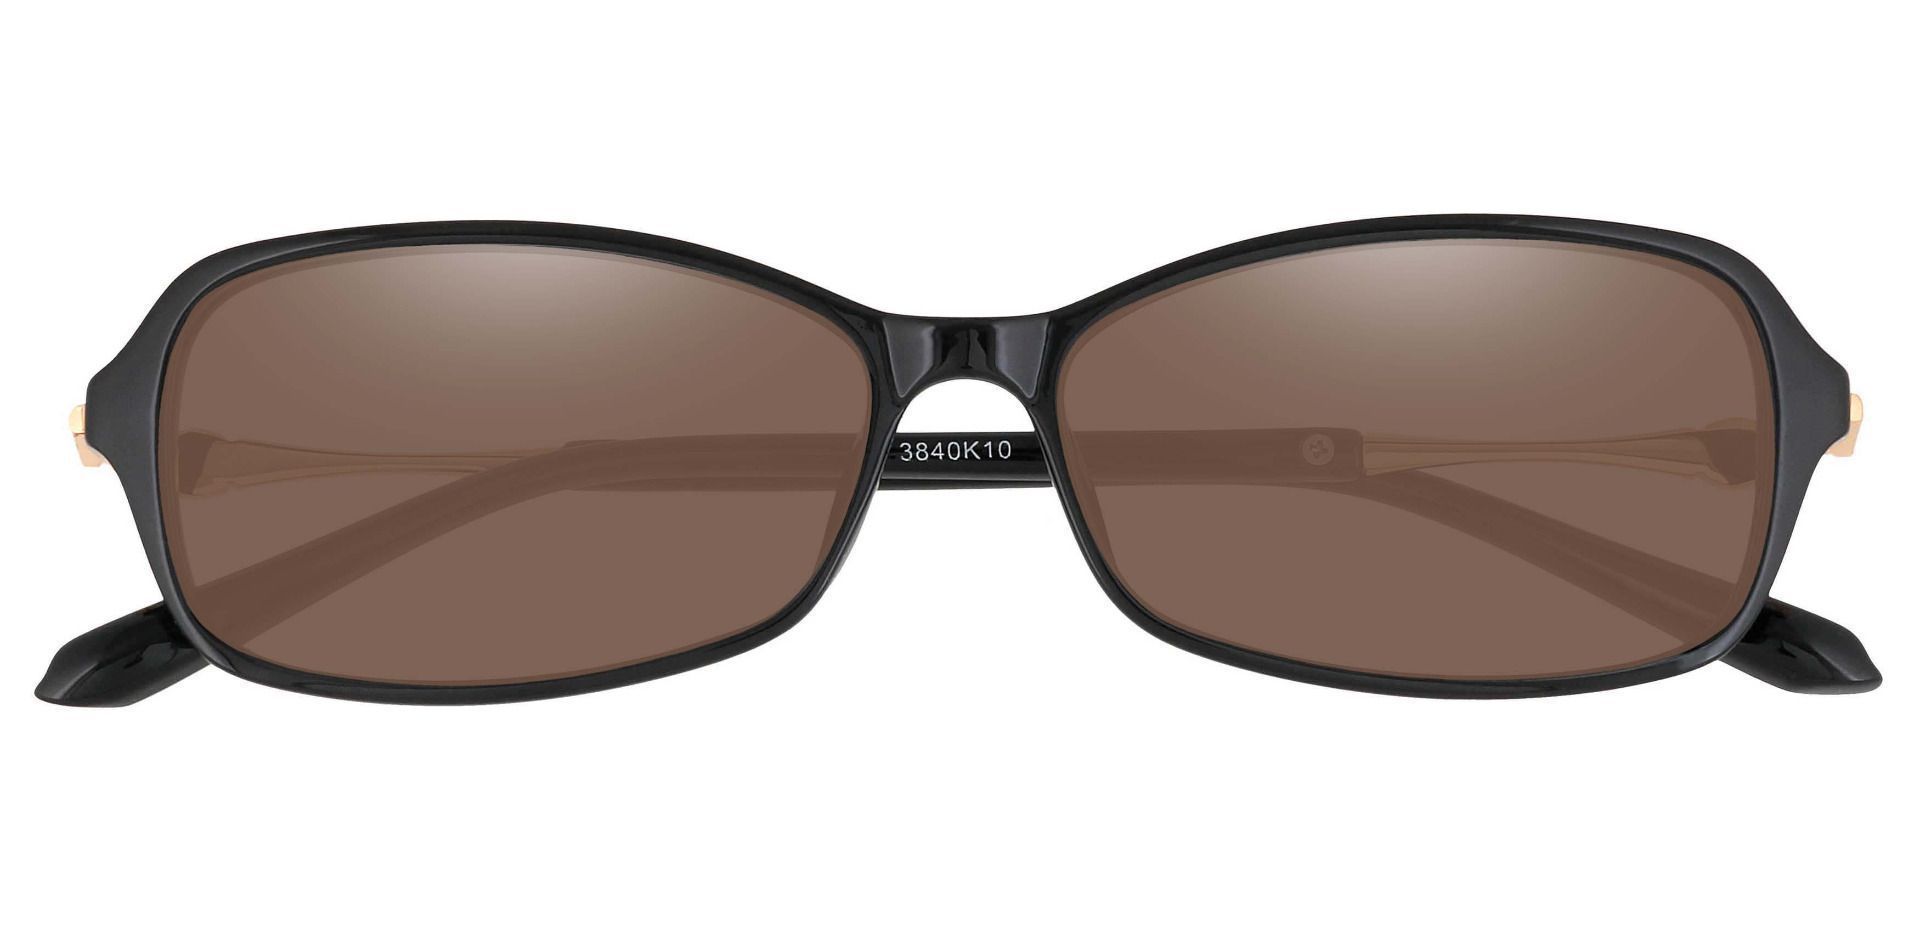 Clover Rectangle Prescription Sunglasses - Black Frame With Brown ...